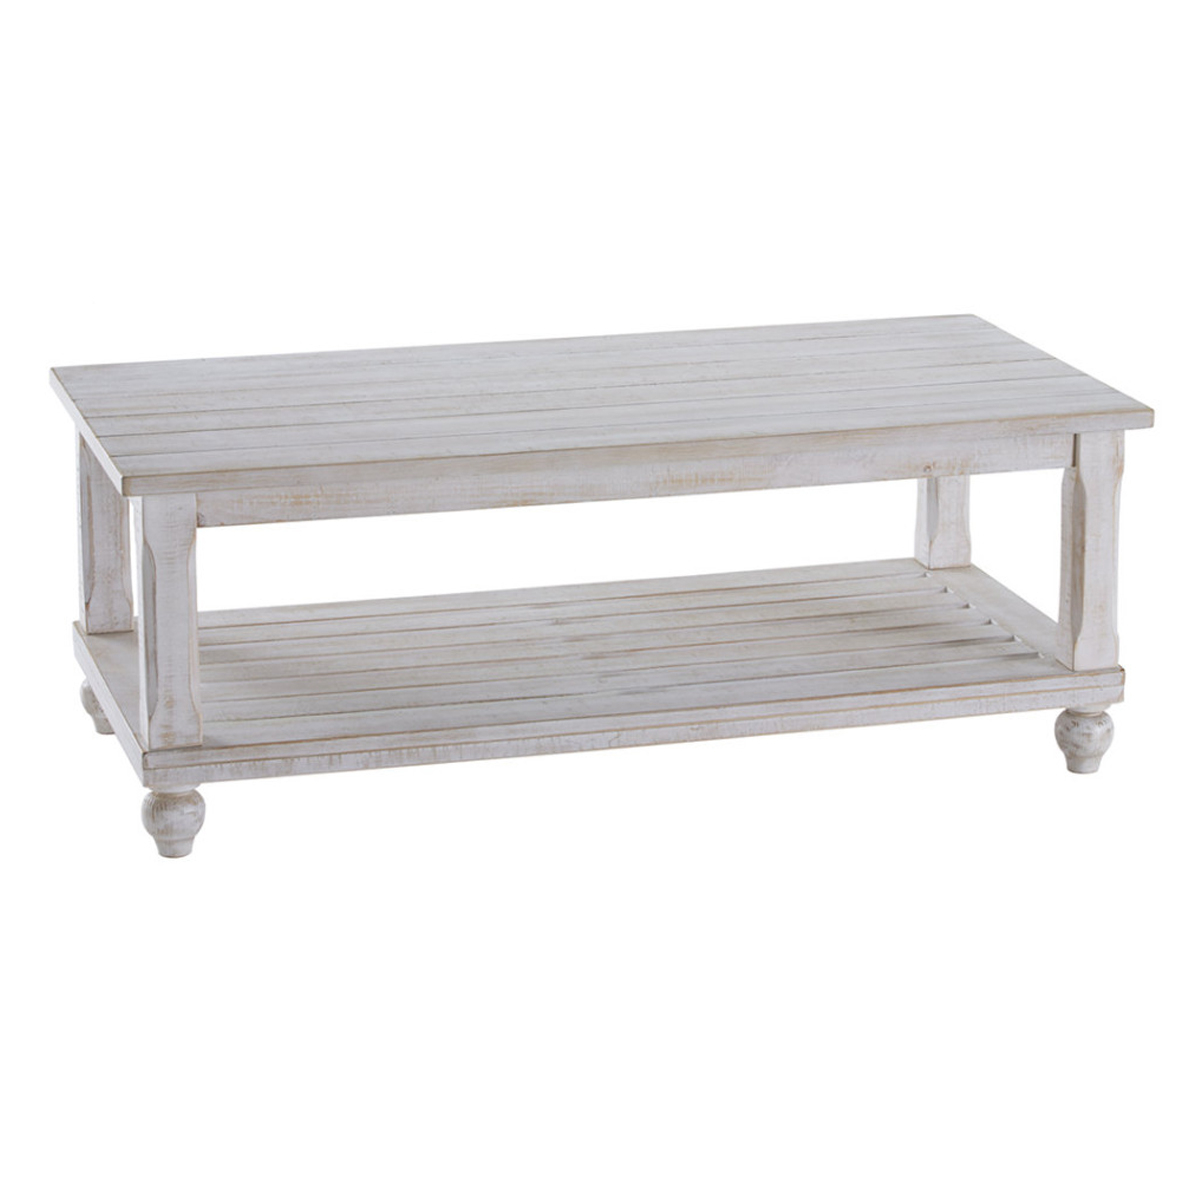 Plank Style Wooden Table Set With Slatted Lower Shelf And Bun Feet, Set Of Three, White- Saltoro Sherpi